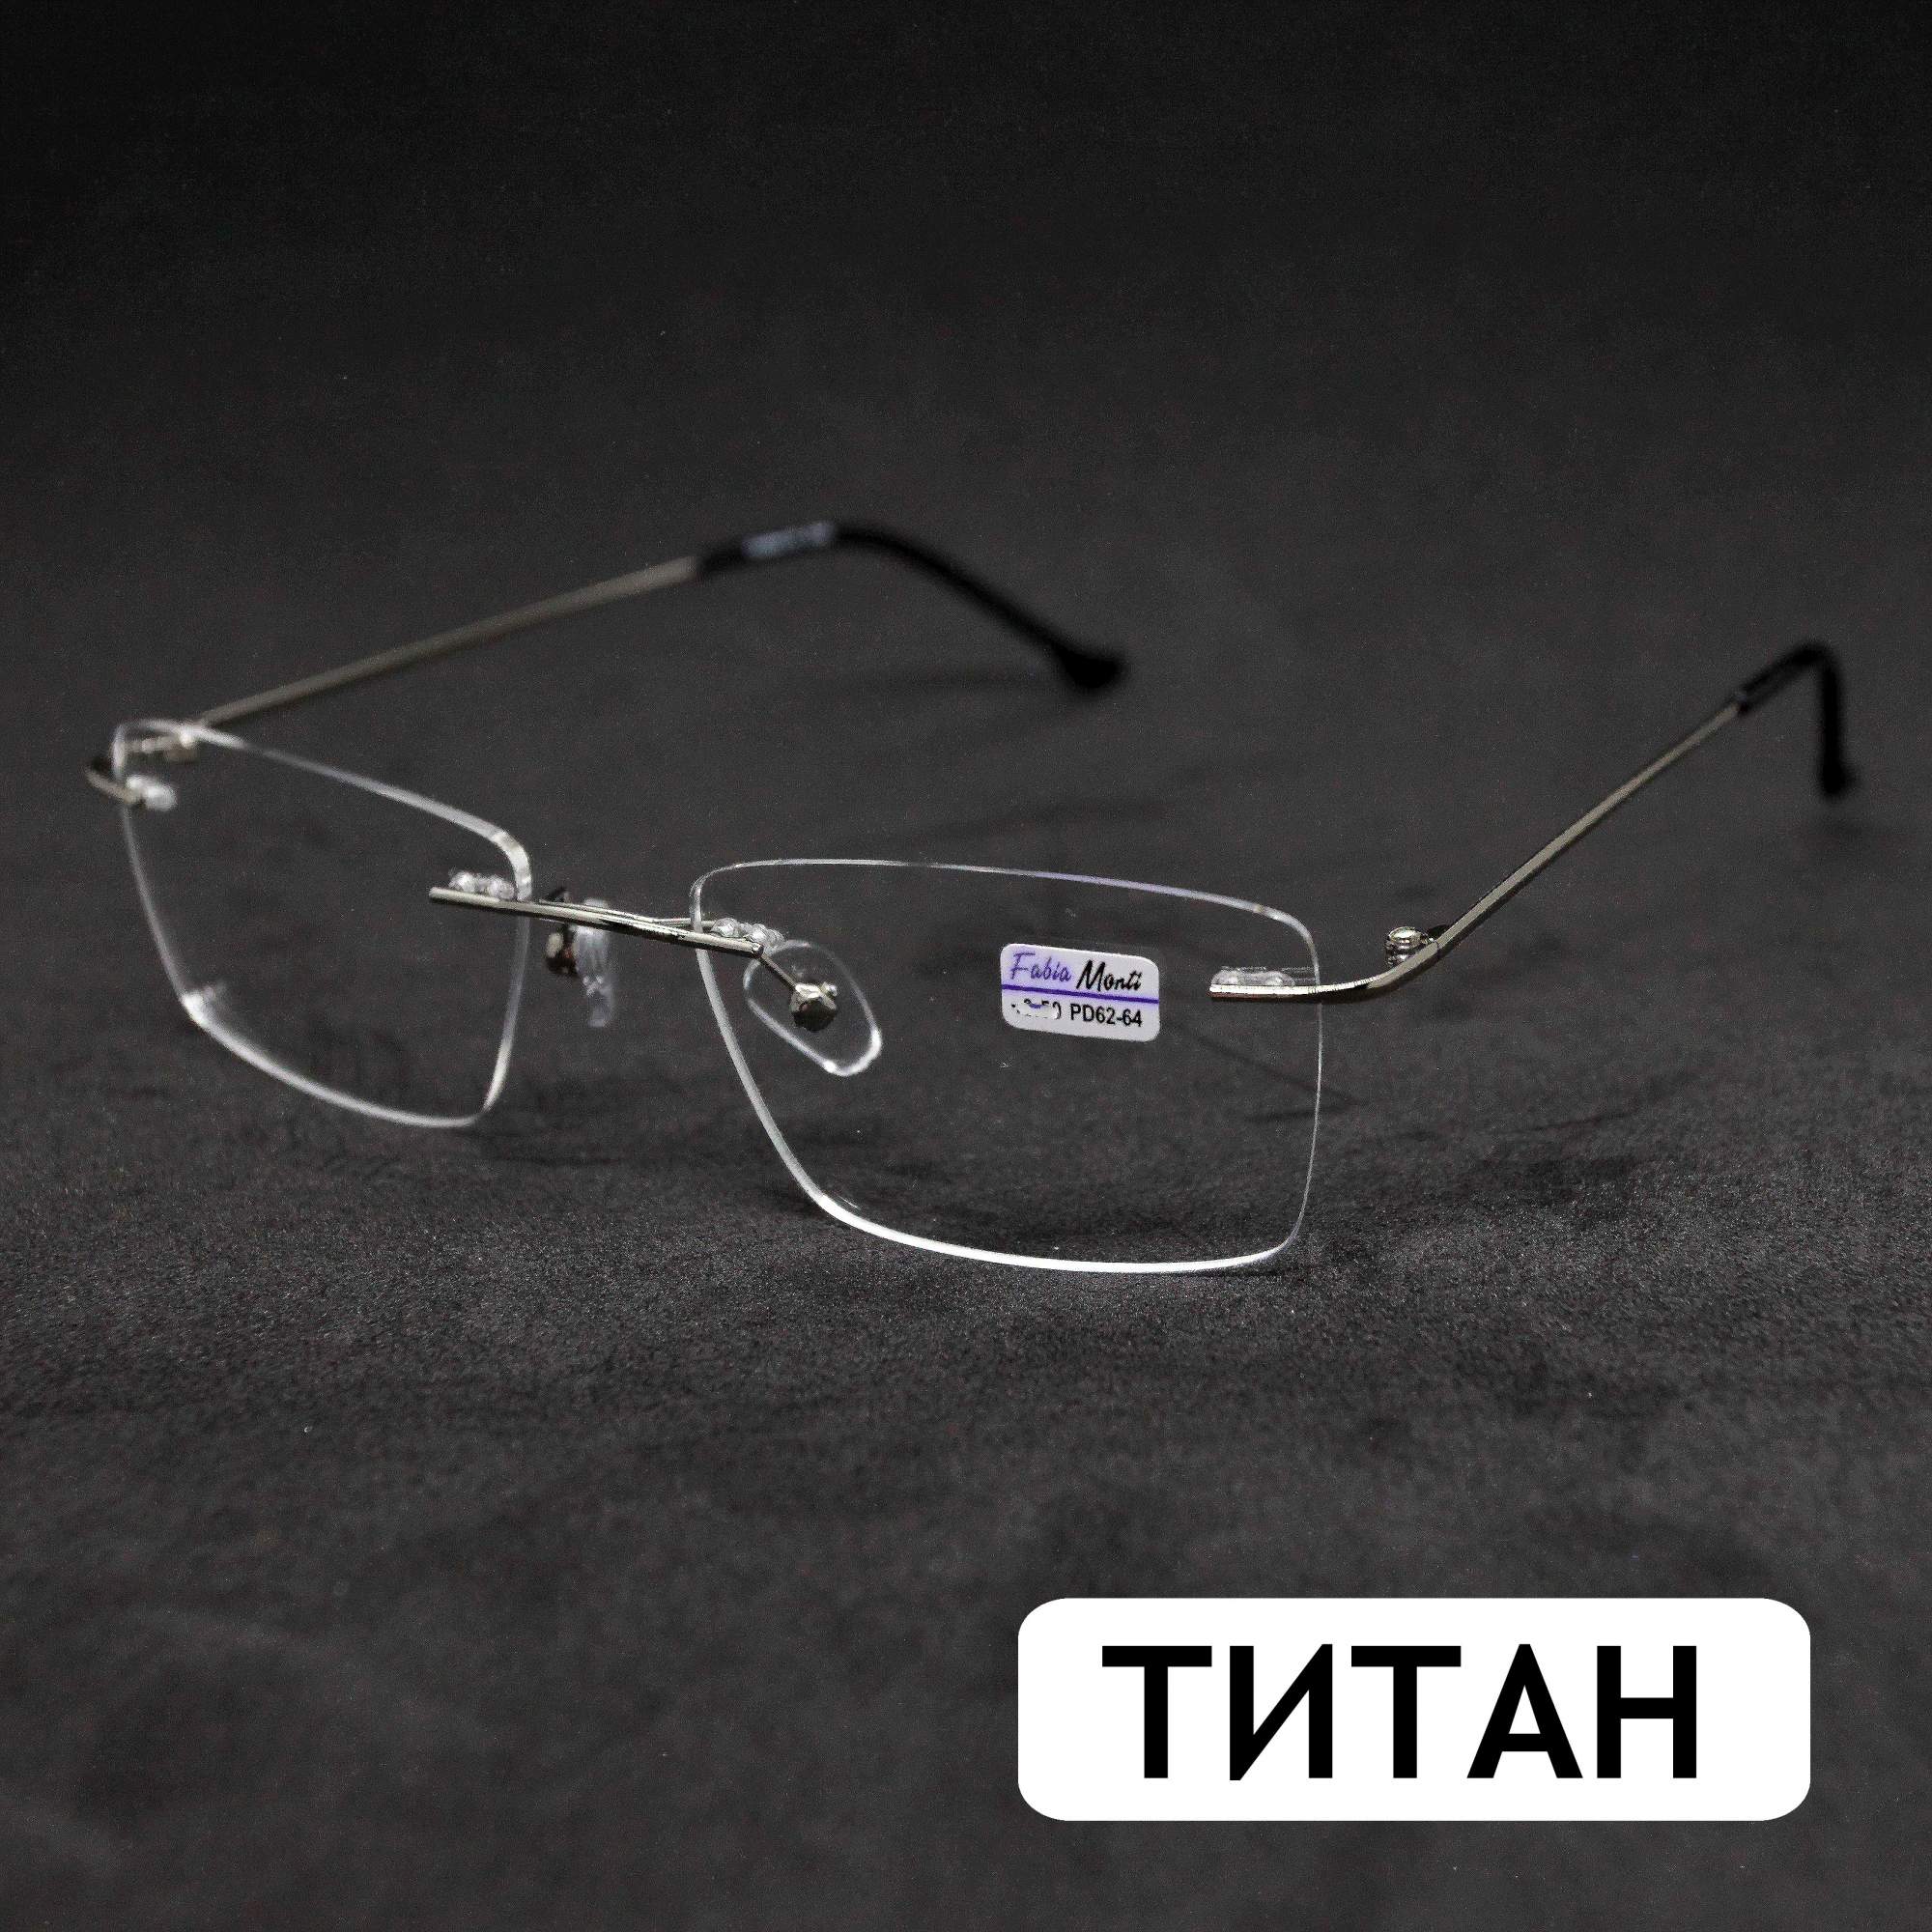 Безободковые очки FM 8959 -6.00, без футляра, оправа титан, серые, РЦ 62-64